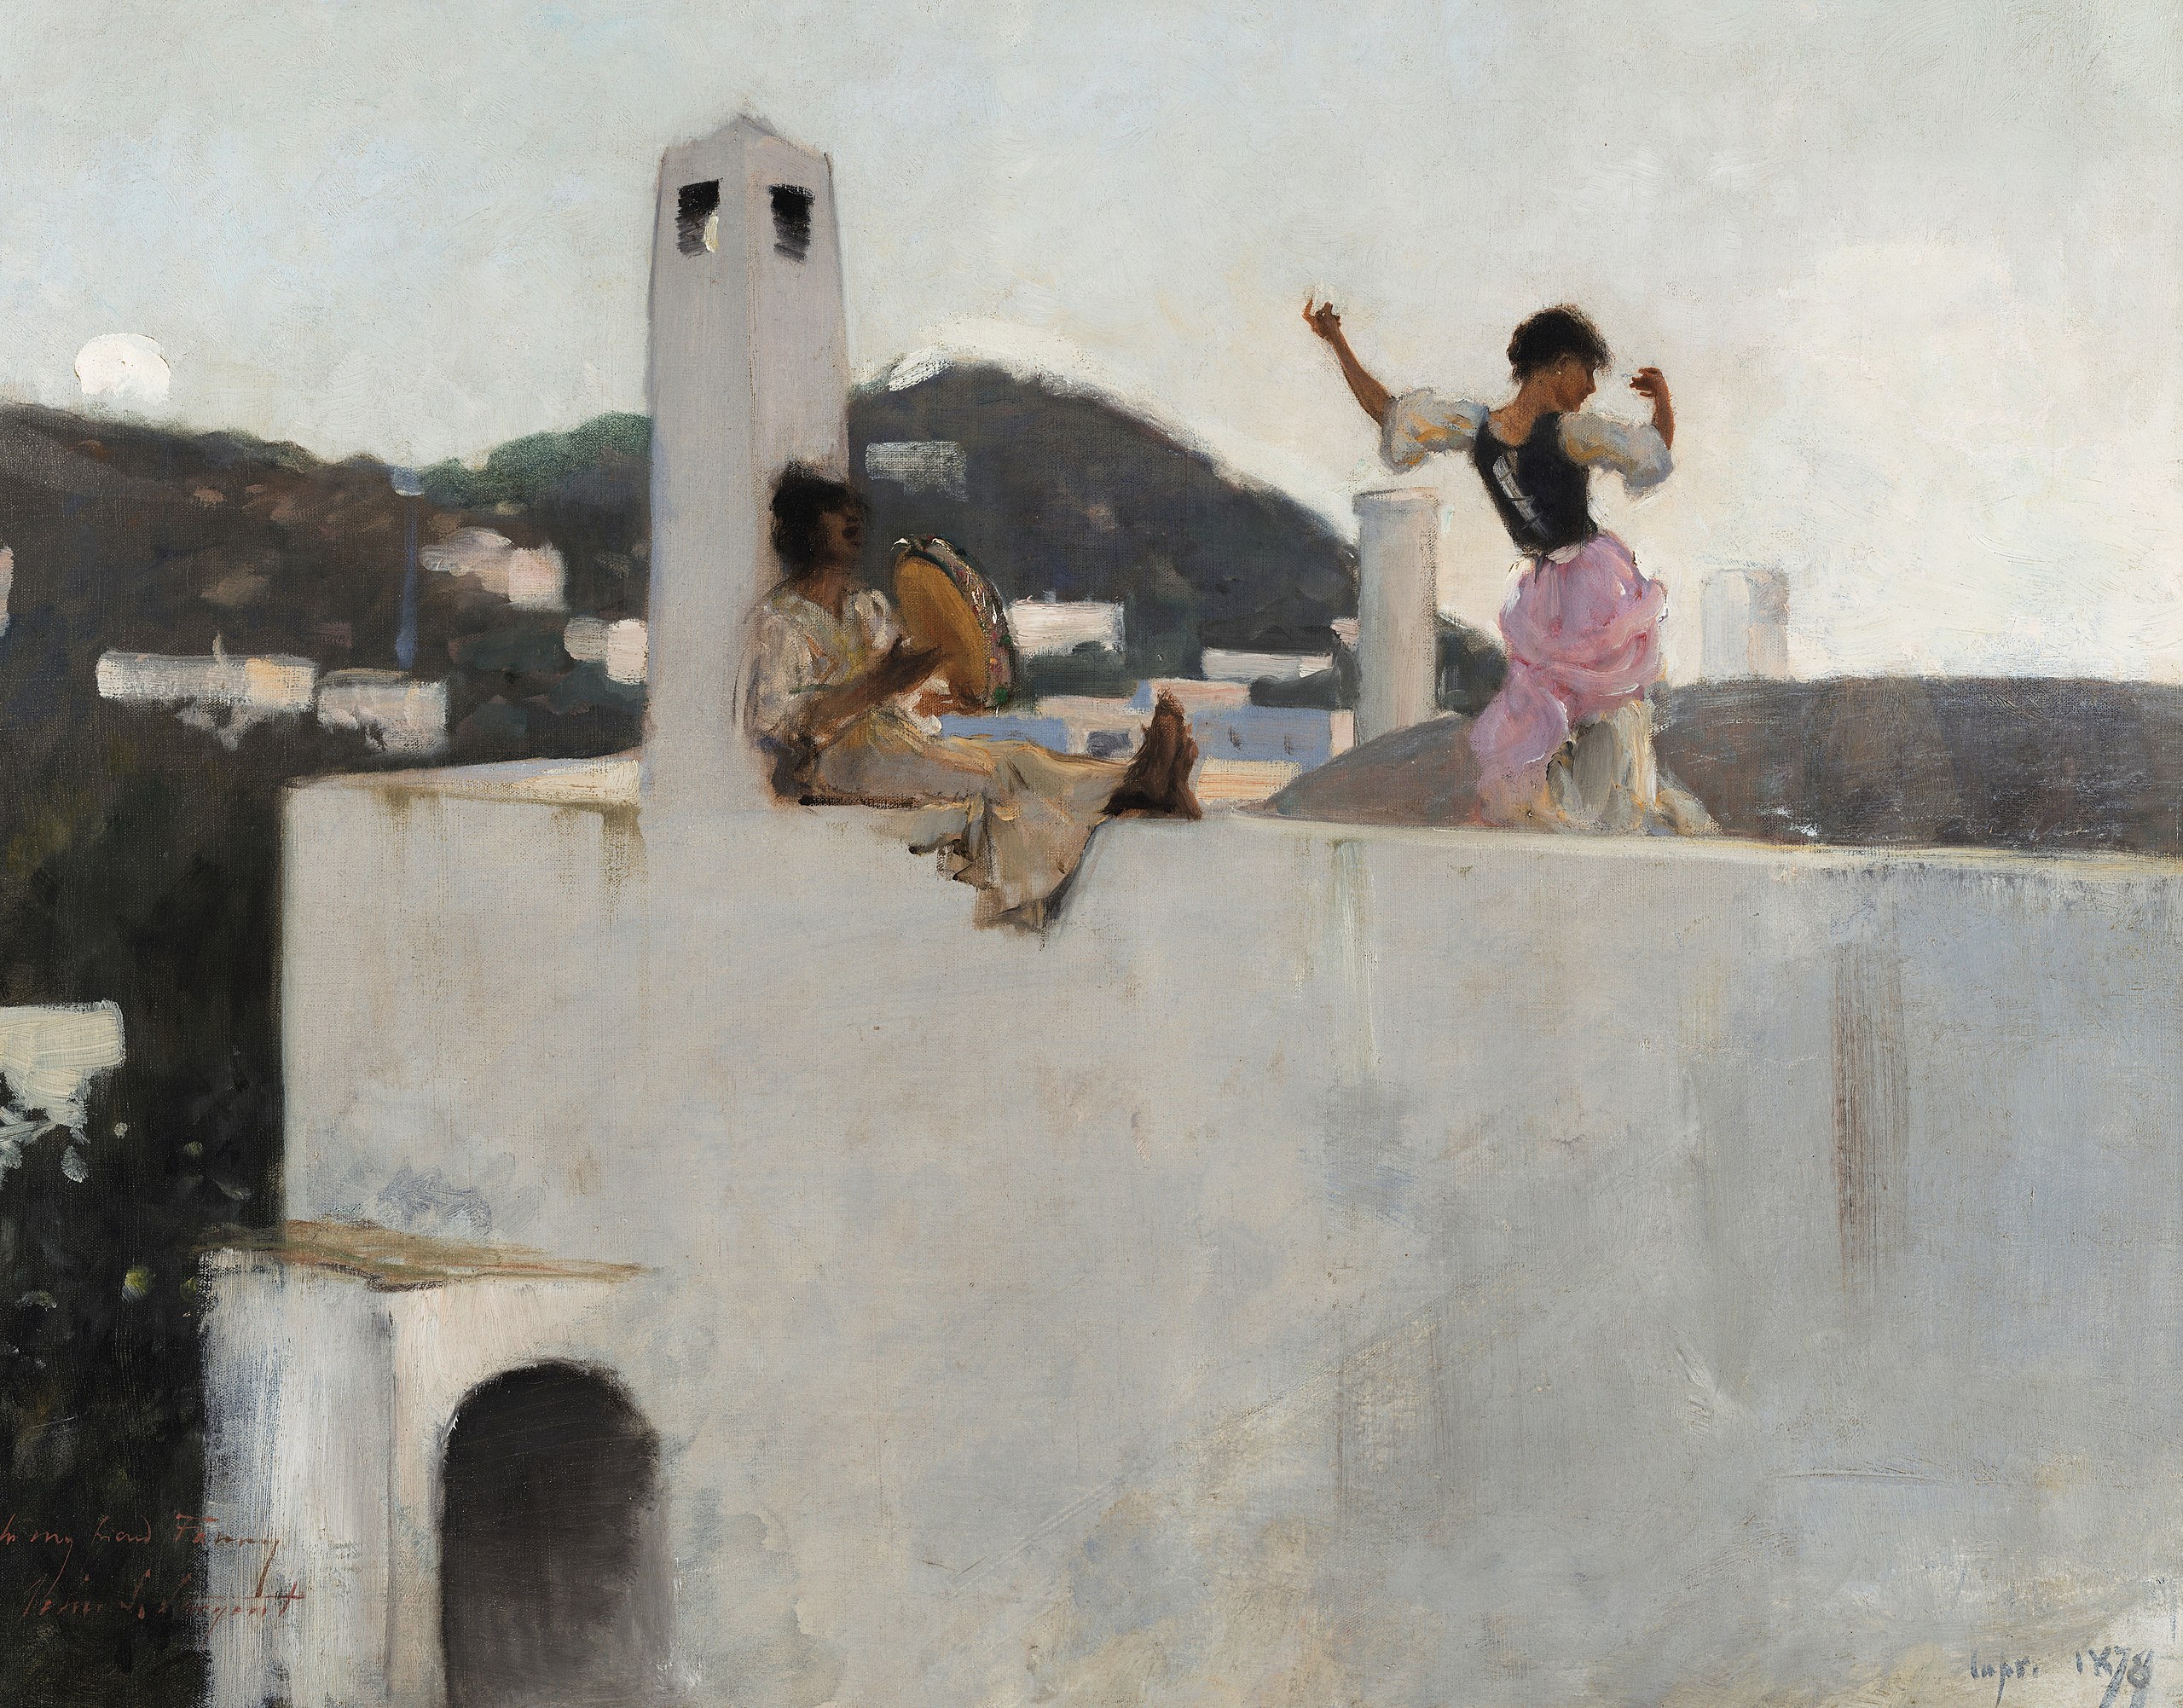 Capri-flicka på tak (Capri Girl on a Rooftop) by John Singer Sargent - 1878 - 50,8 x 63,5 cm 